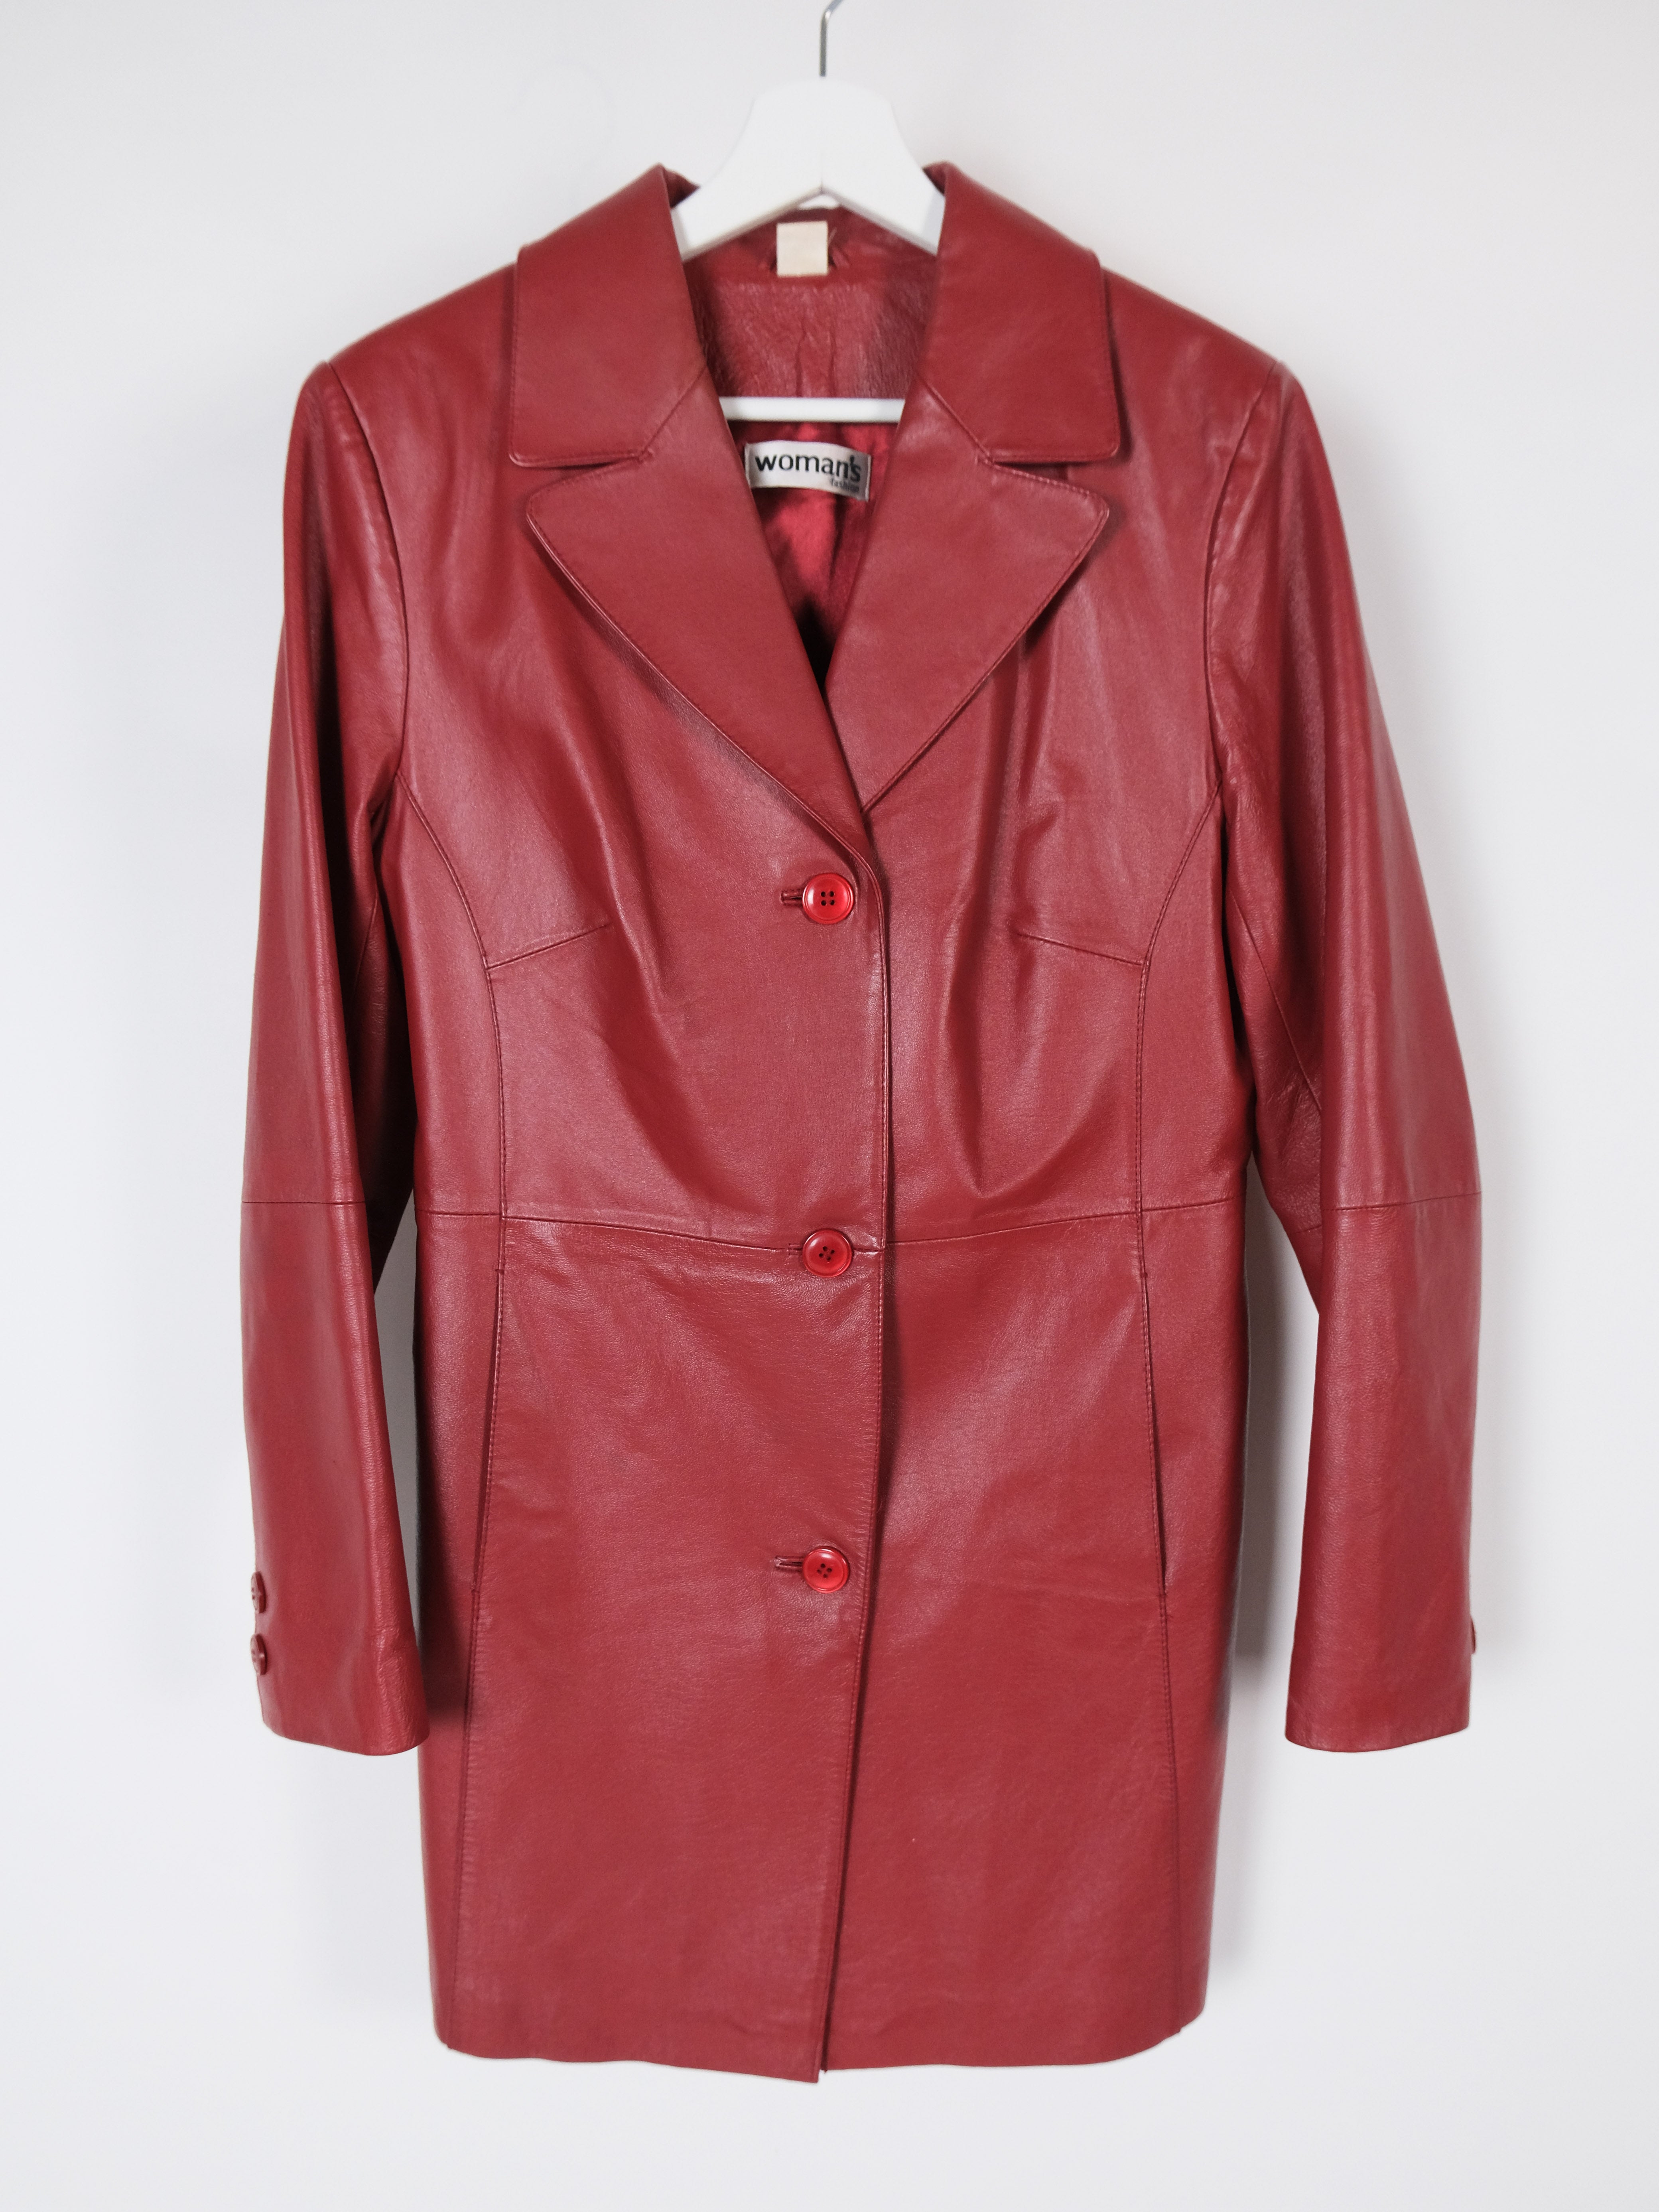 Leather coat red blazer